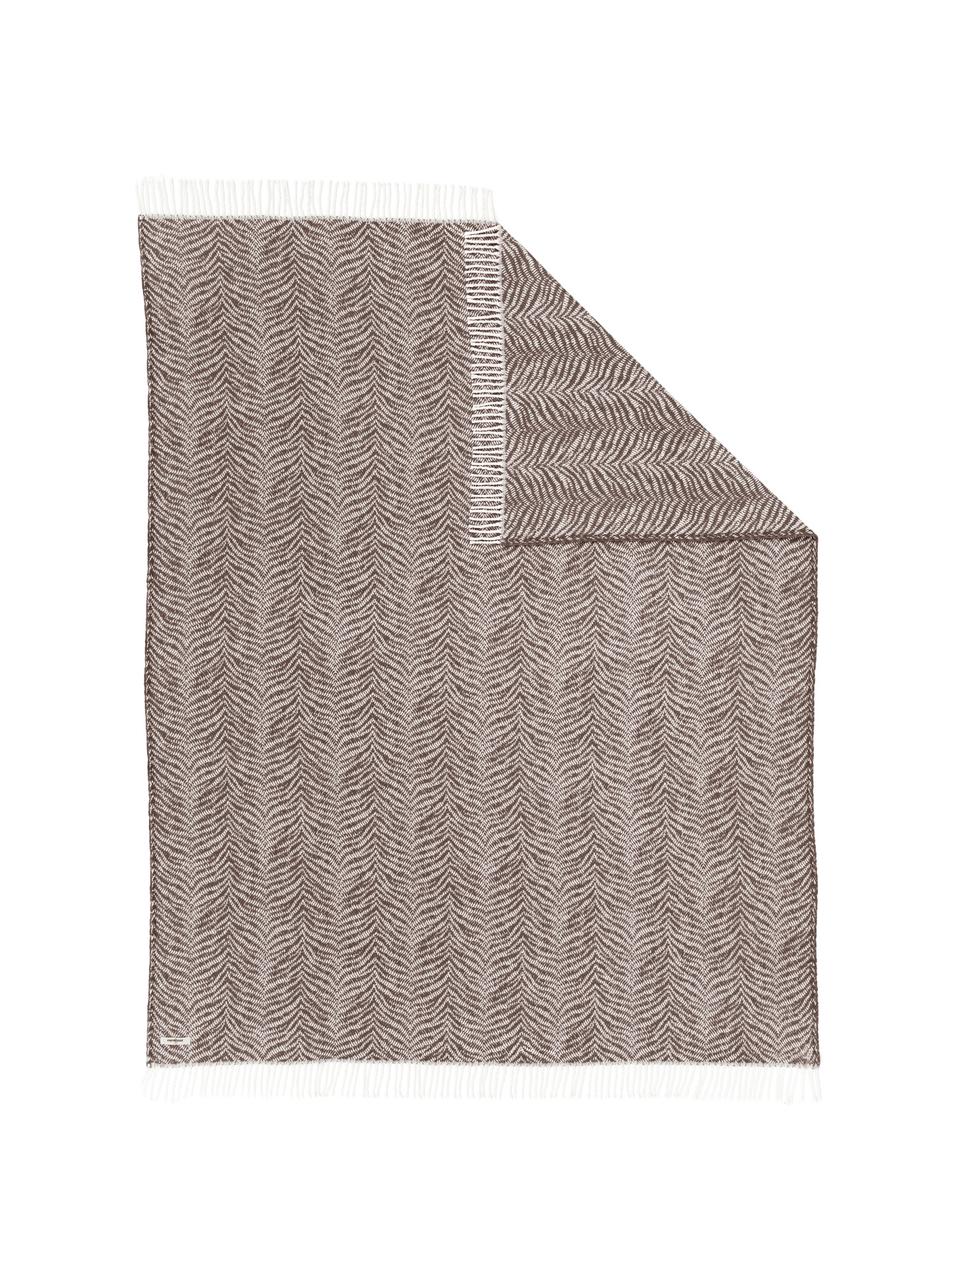 Plaid Greta mit Tiger-Muster, 50% Baumwolle, 50% Acryl, Taupe, Gebrochenes Weiß, 140 x 180 cm